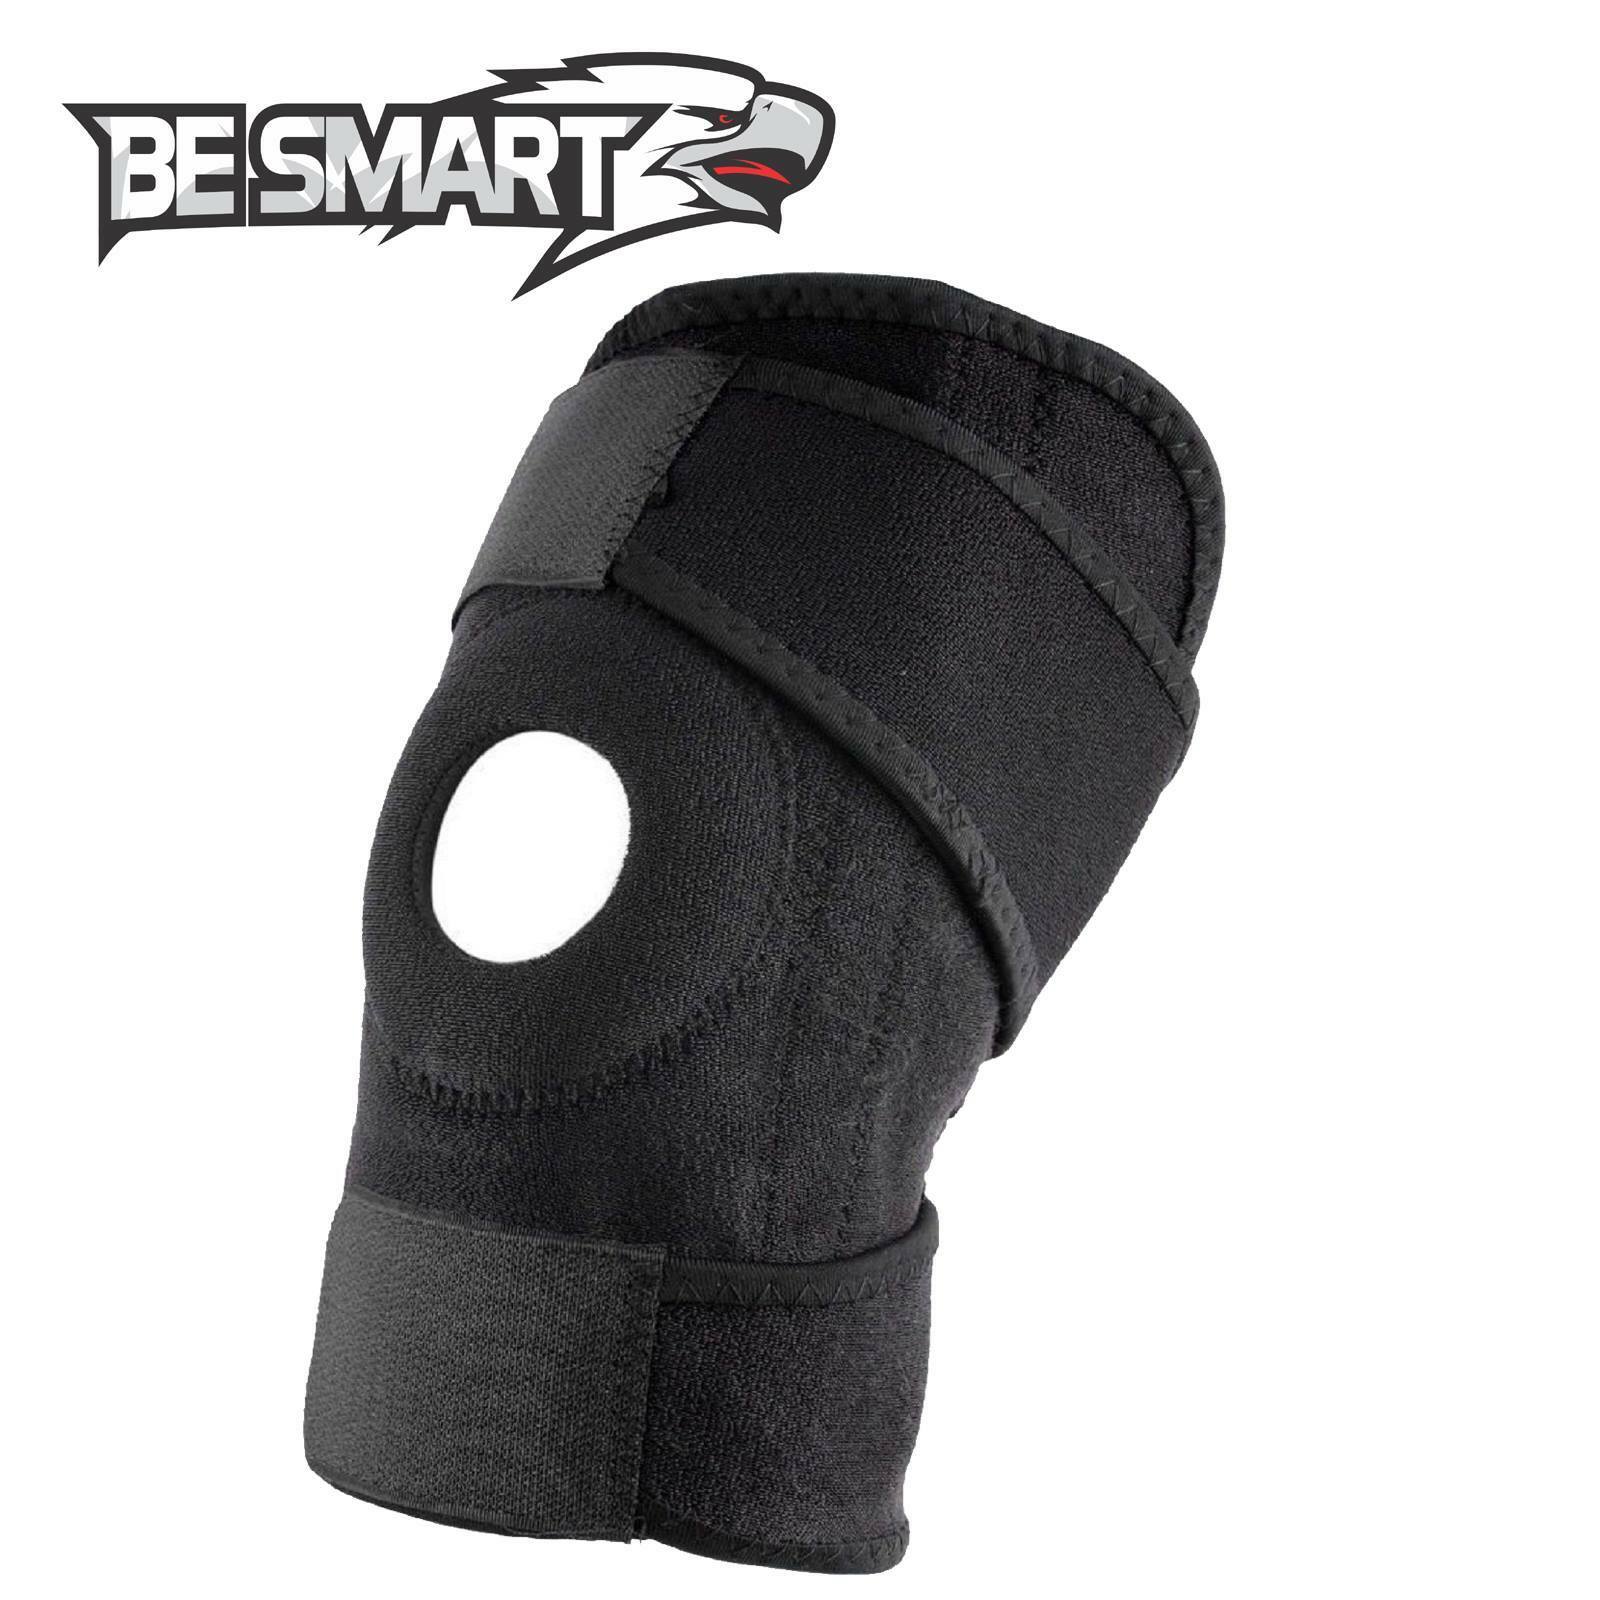 Be Smart New Wrap Around Knee Brace Support Adjustable  Knee Open Pattela Brace